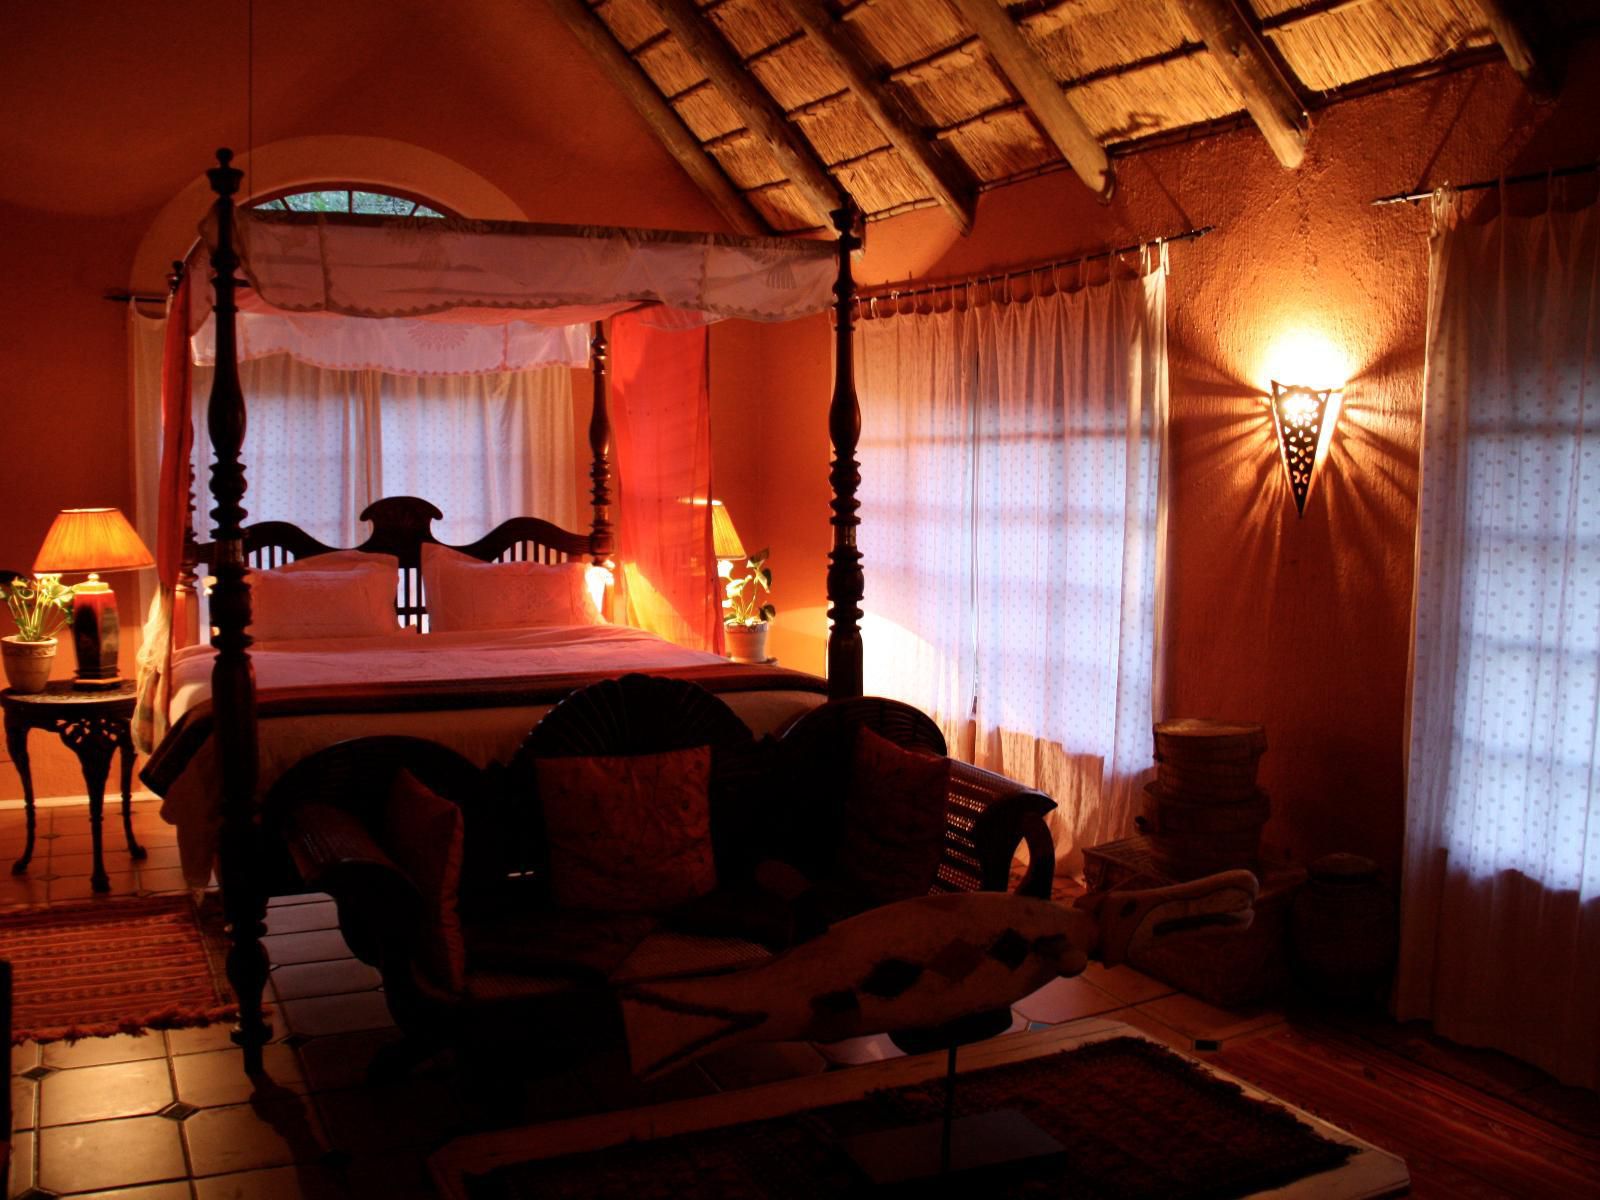 Timamoon Lodge Hazyview Mpumalanga South Africa Colorful